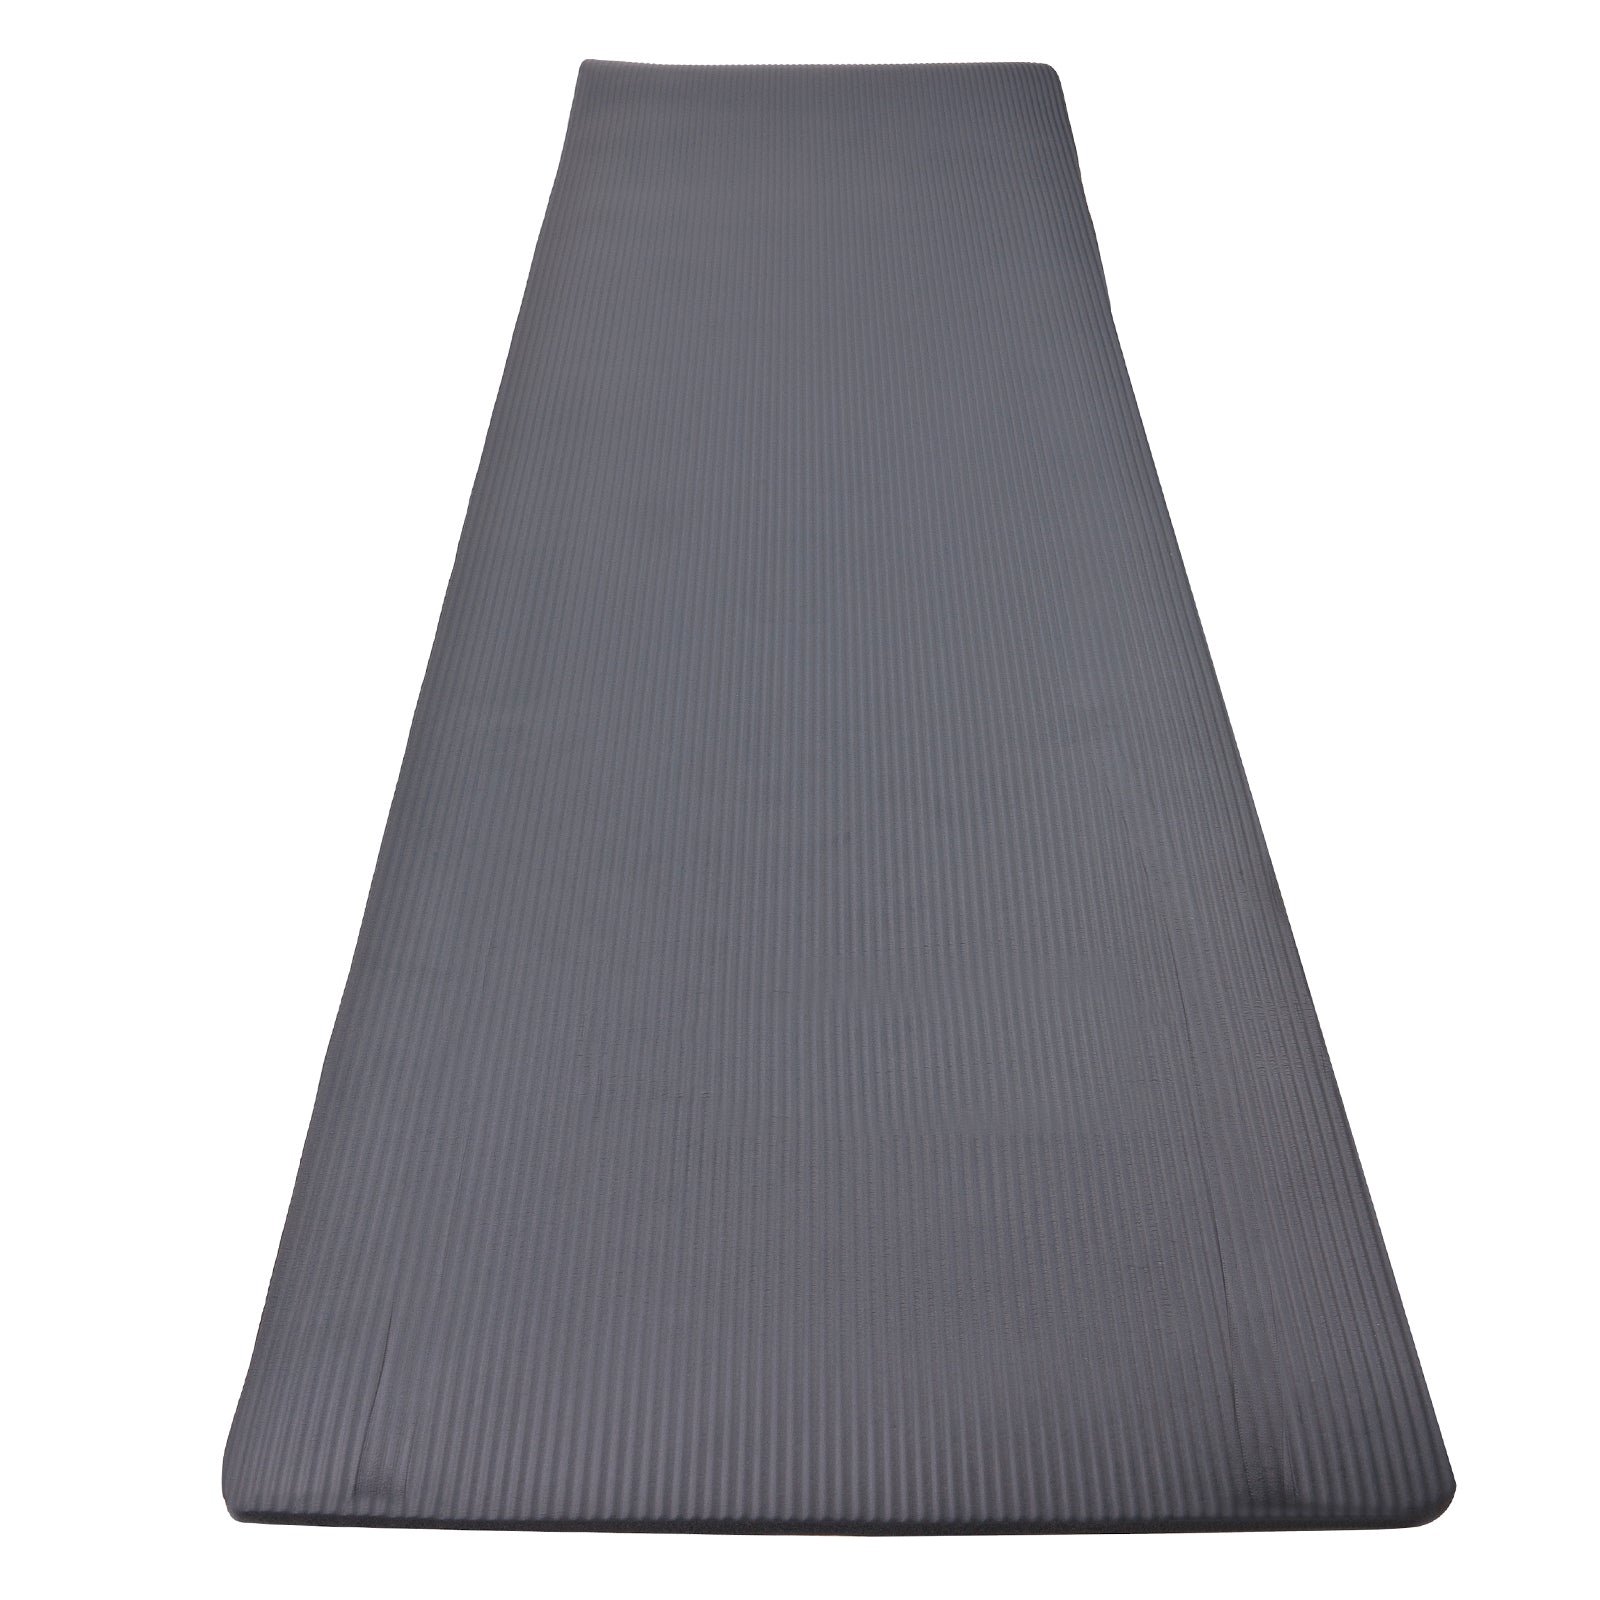 gofit exercise mat